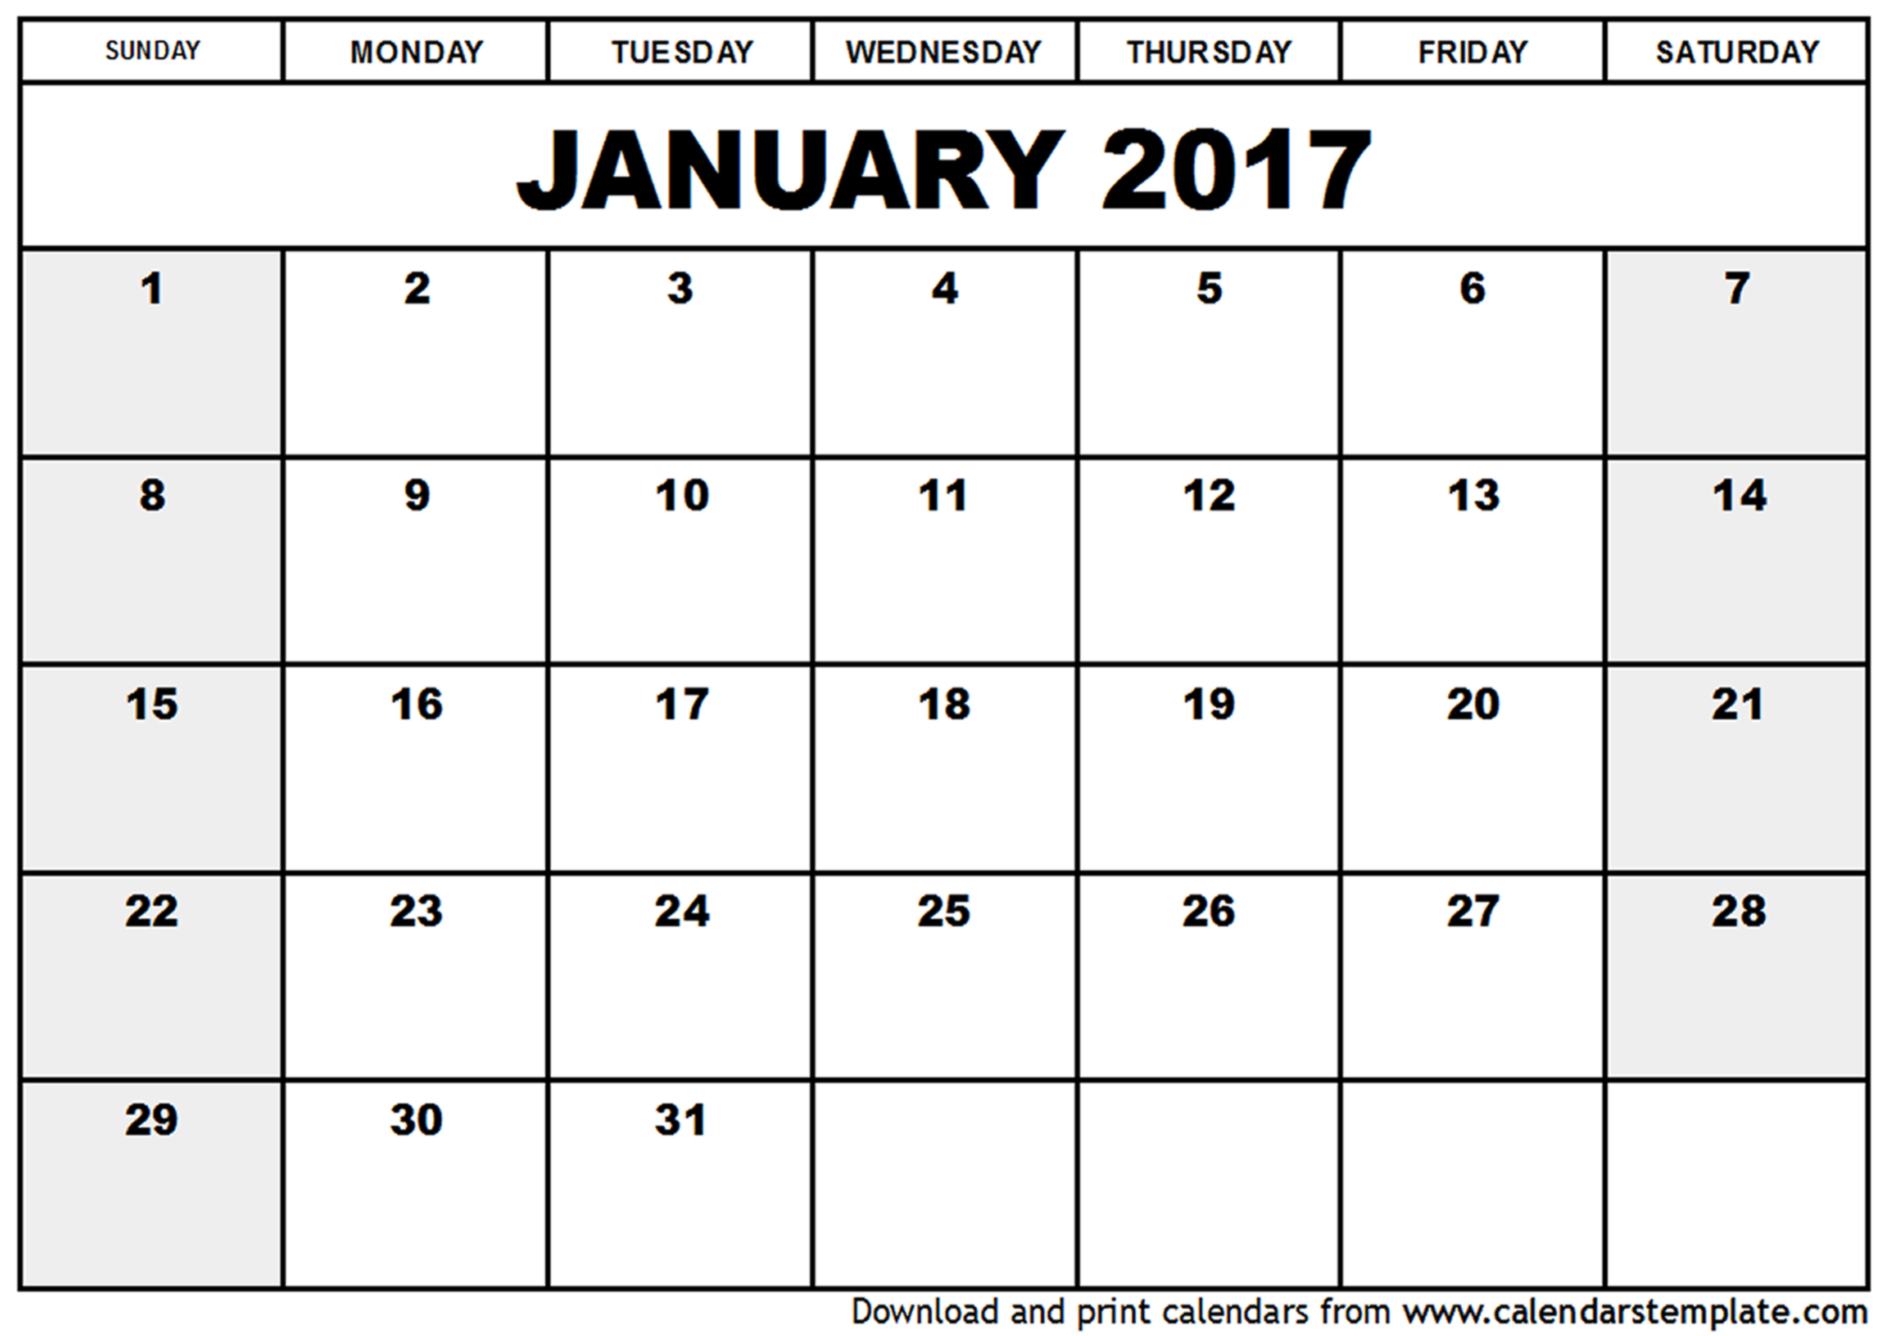 Free January 2017 calendar printable